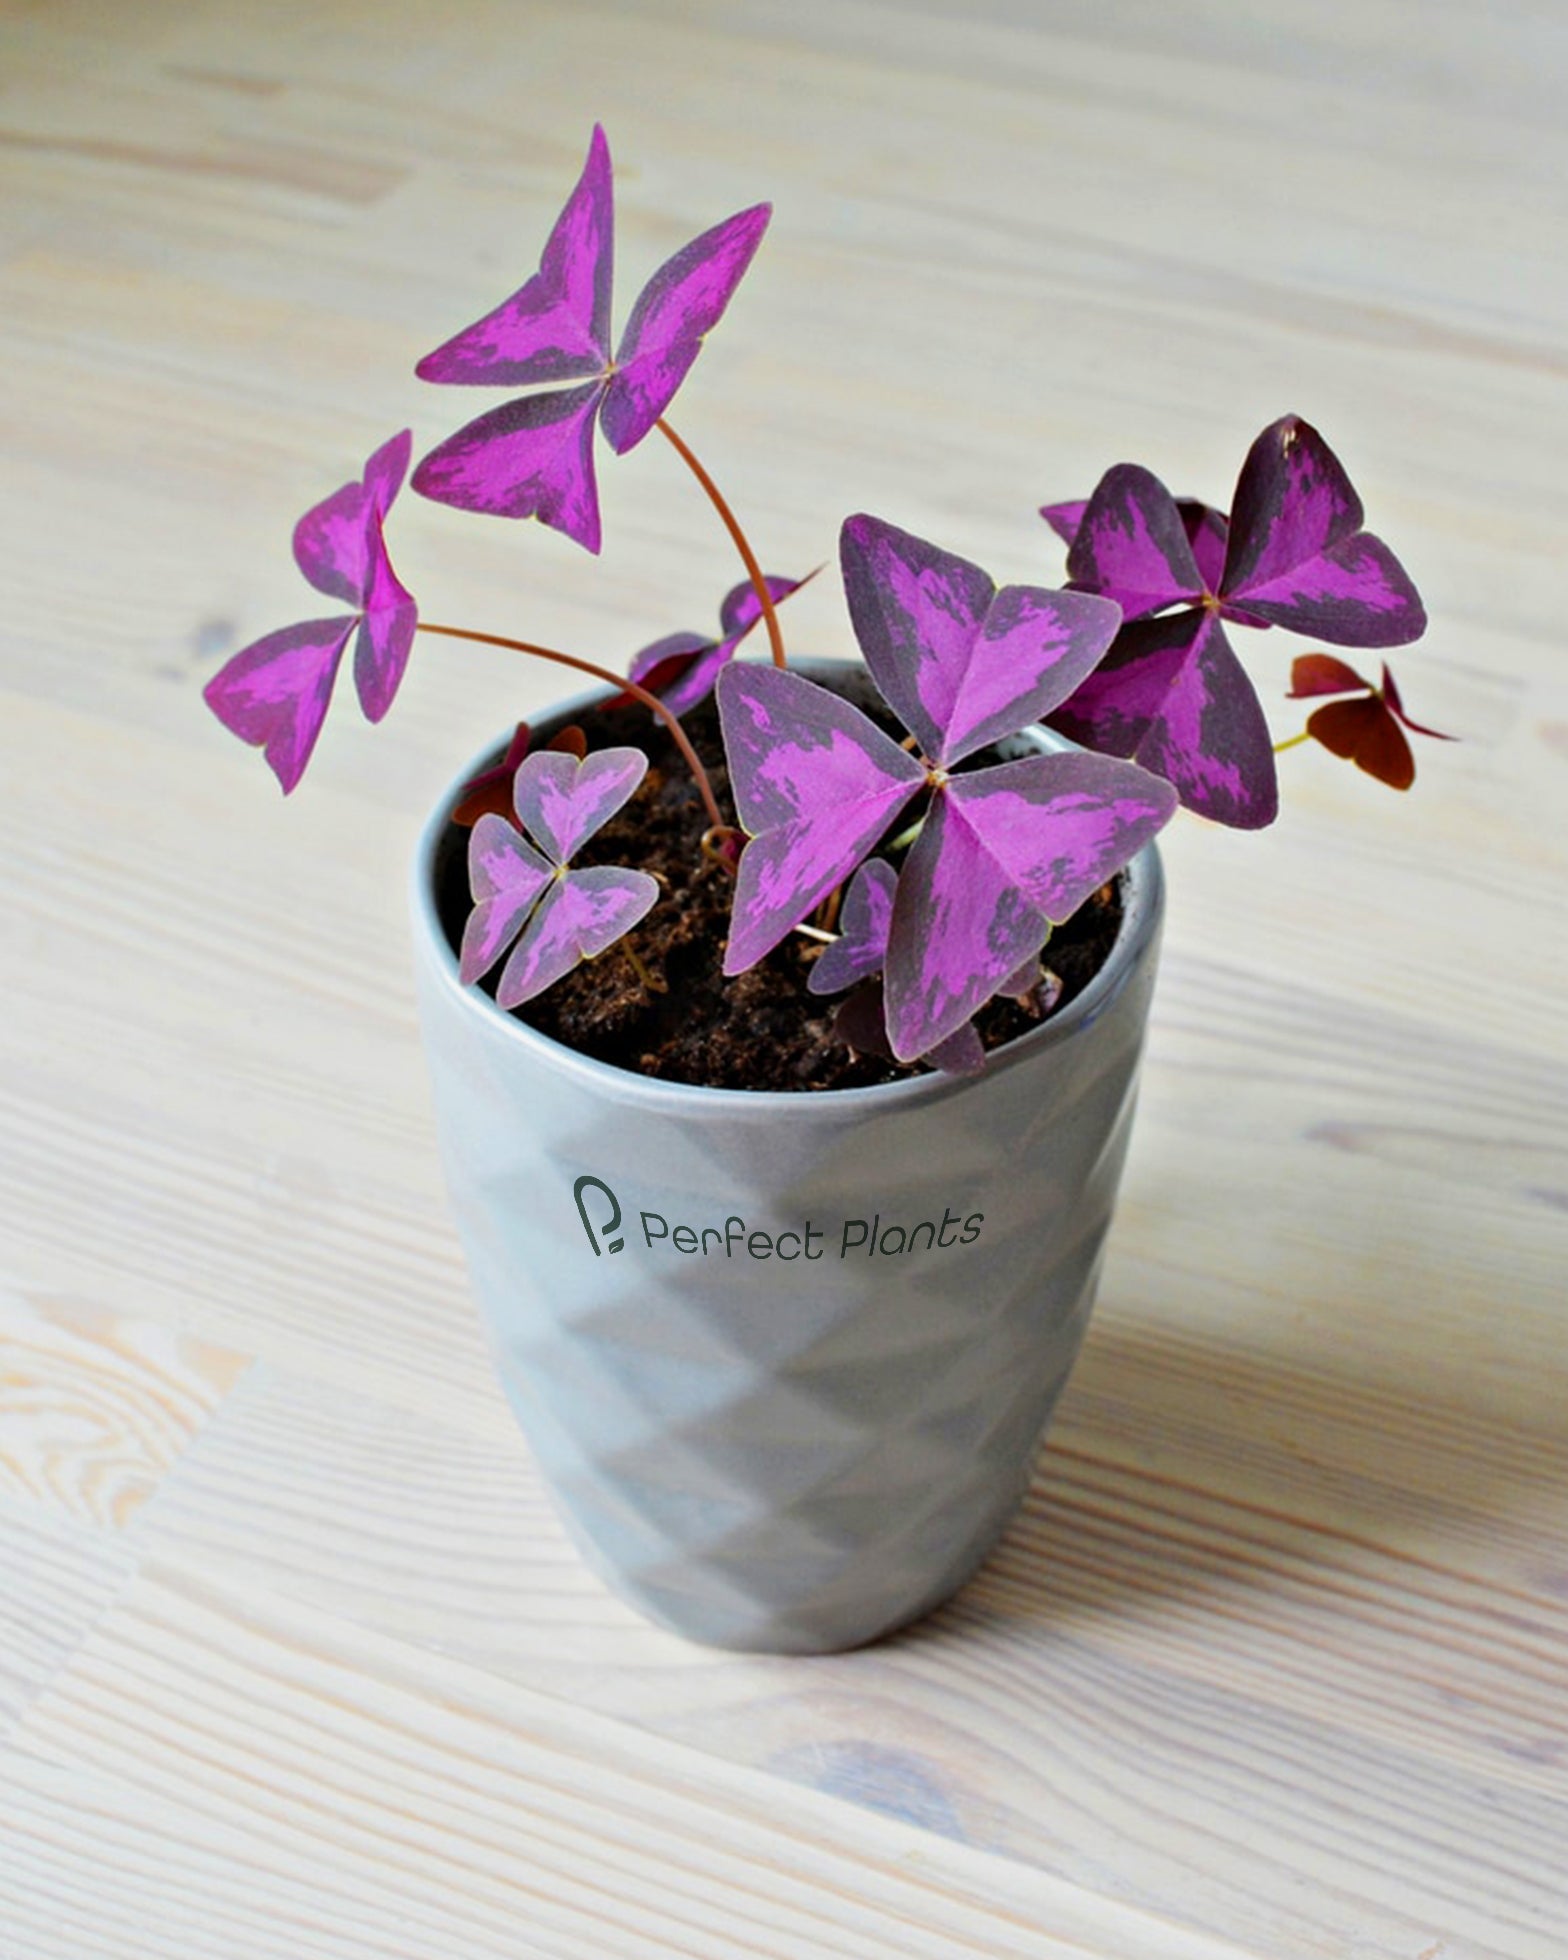 Oxalis Triangularis - Purple Shamrock - Perfect Plants